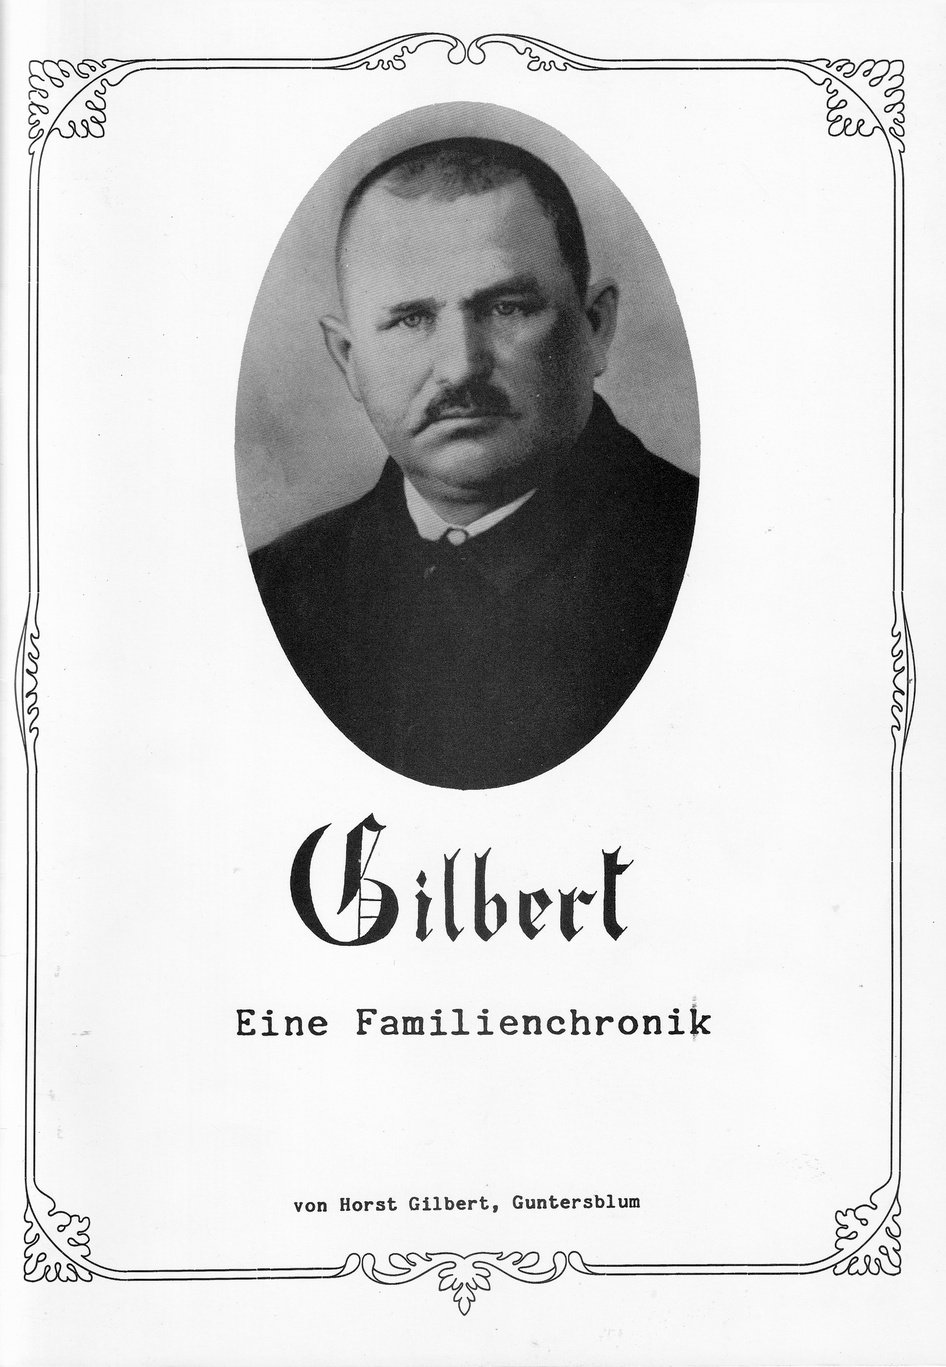 Gilbert (Kulturverein Guntersblum CC BY-NC-SA)